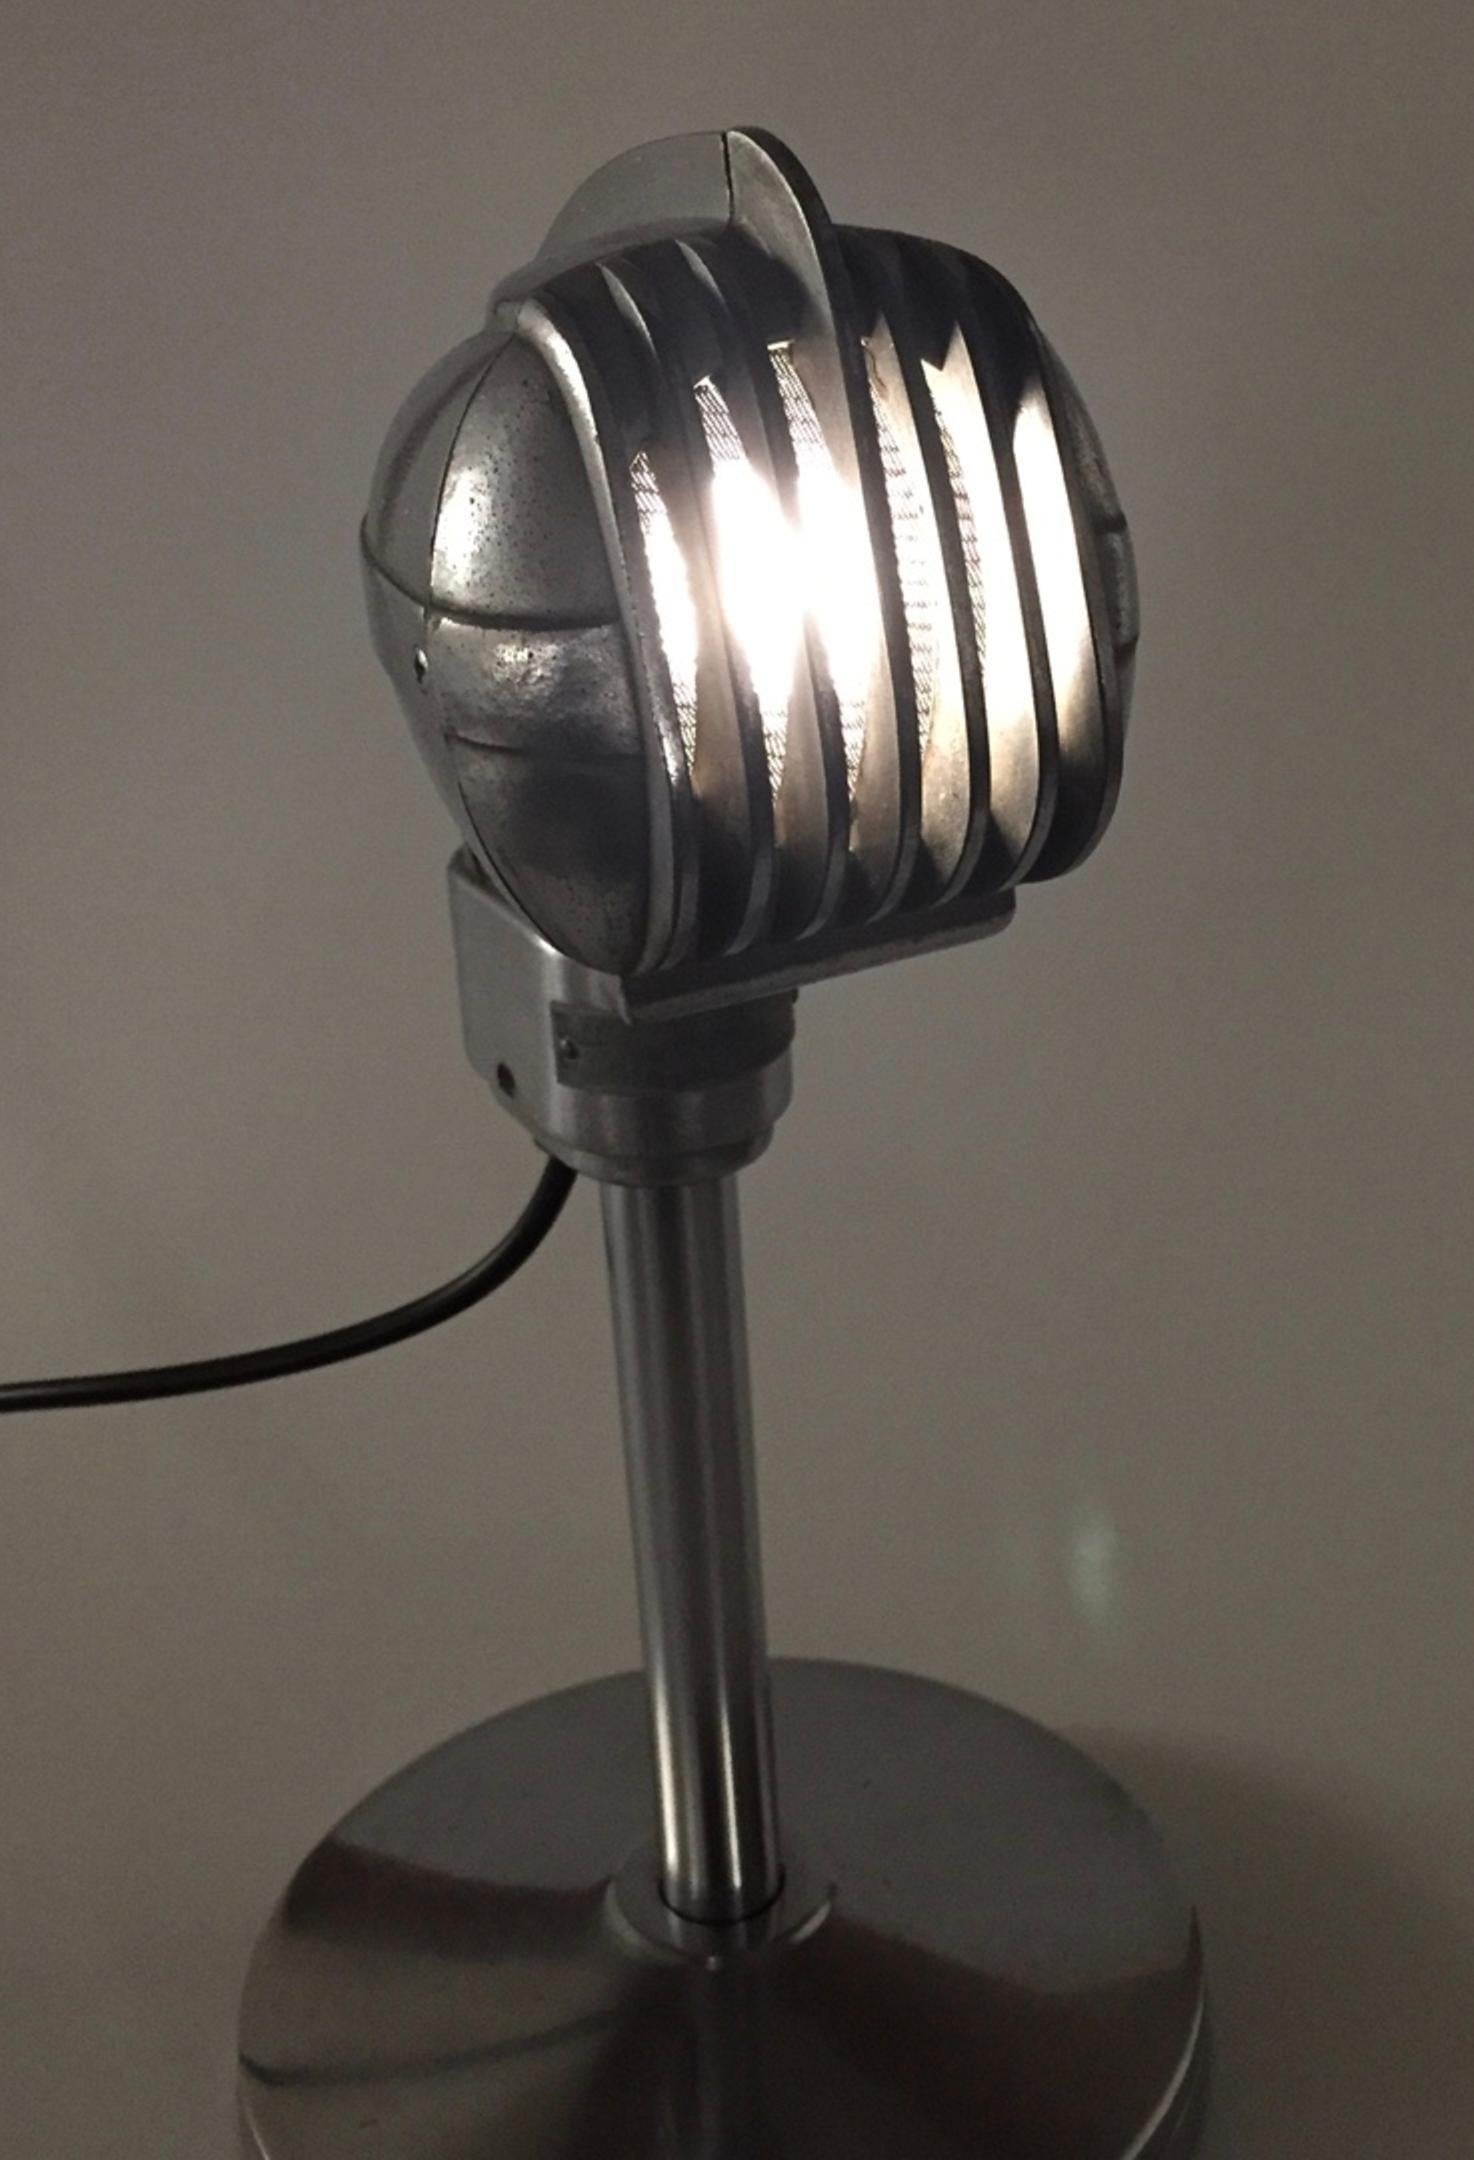 Chuck Krause Still-Life Sculpture - Original 1950s Turner 33D Dynamic Microphone Repurposed Lamp Sculpture